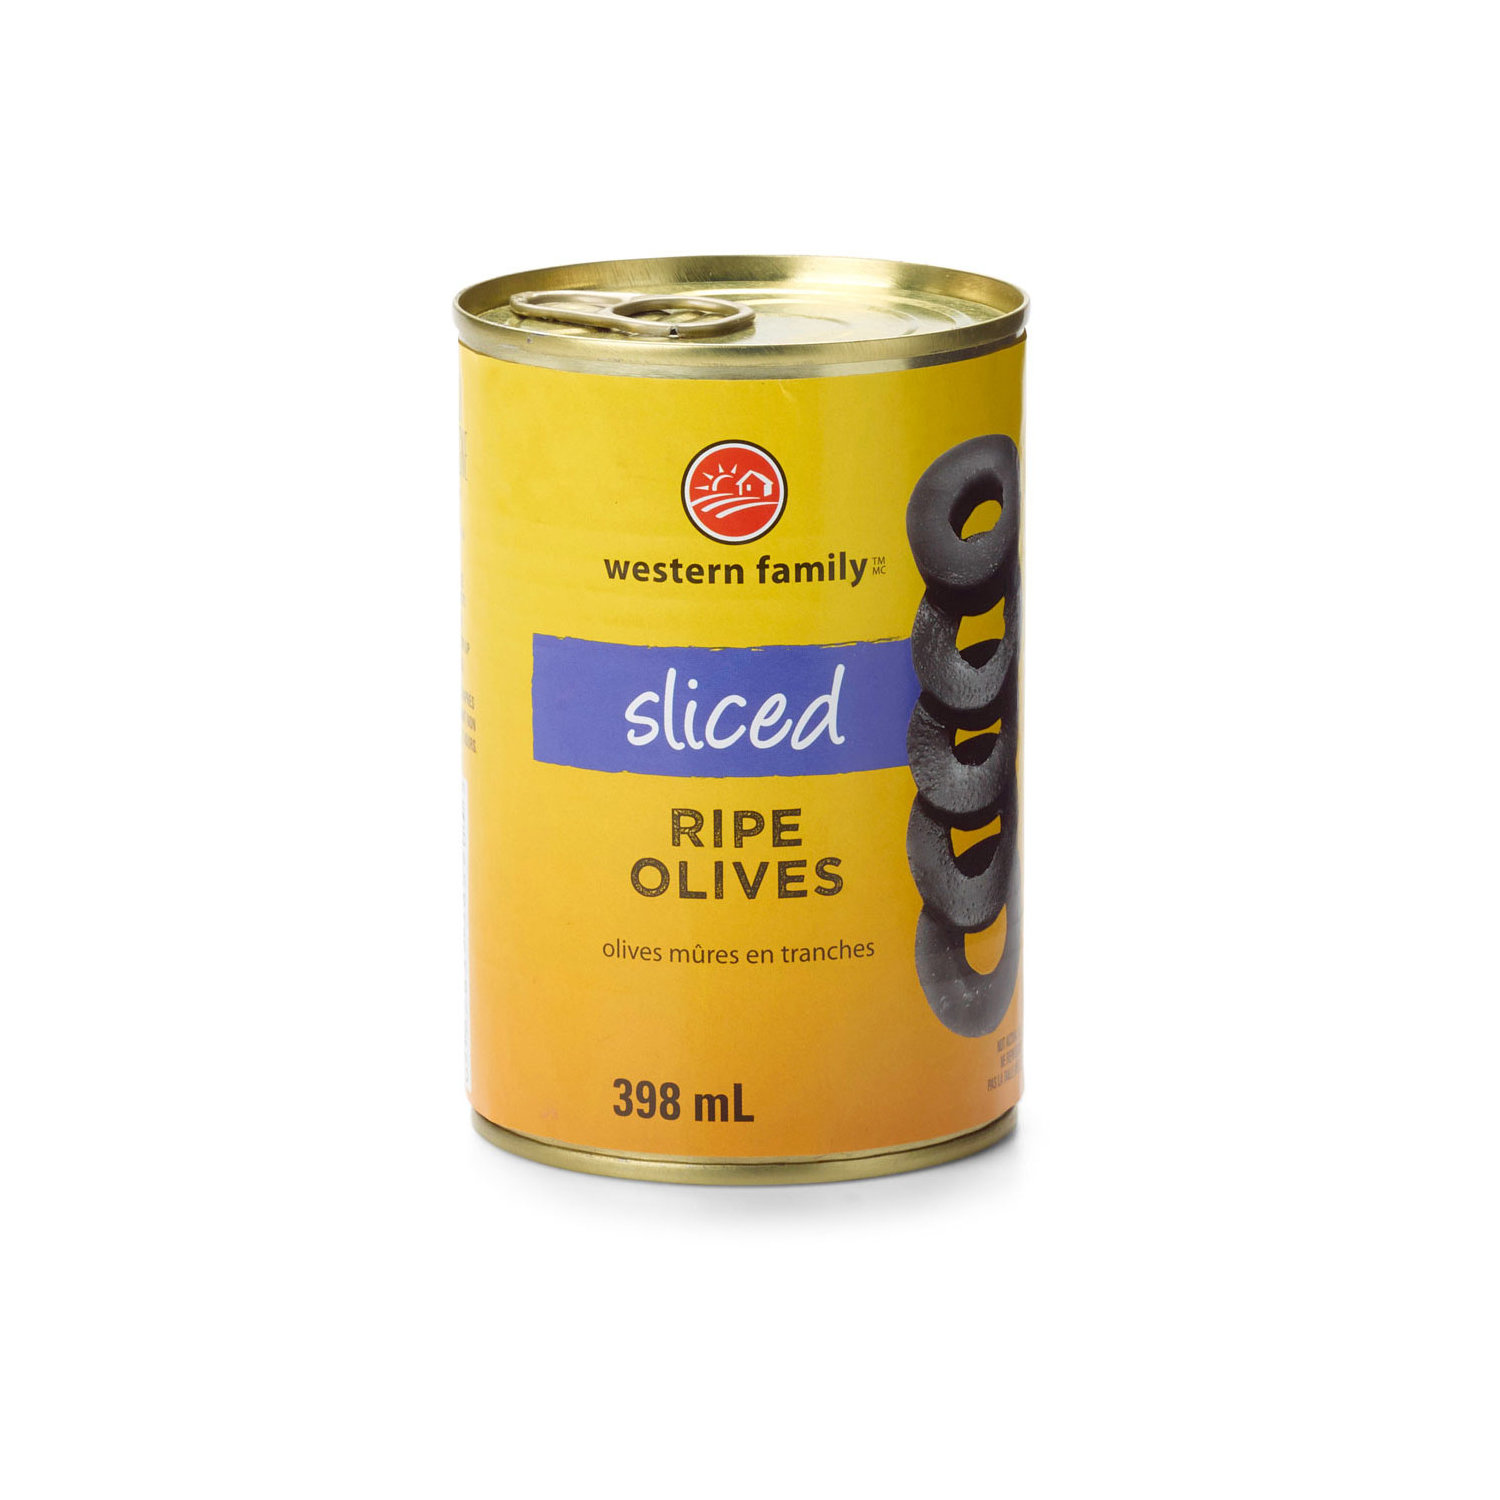 Western Family - Black Ripe Olives, Sliced - Save-On-Foods